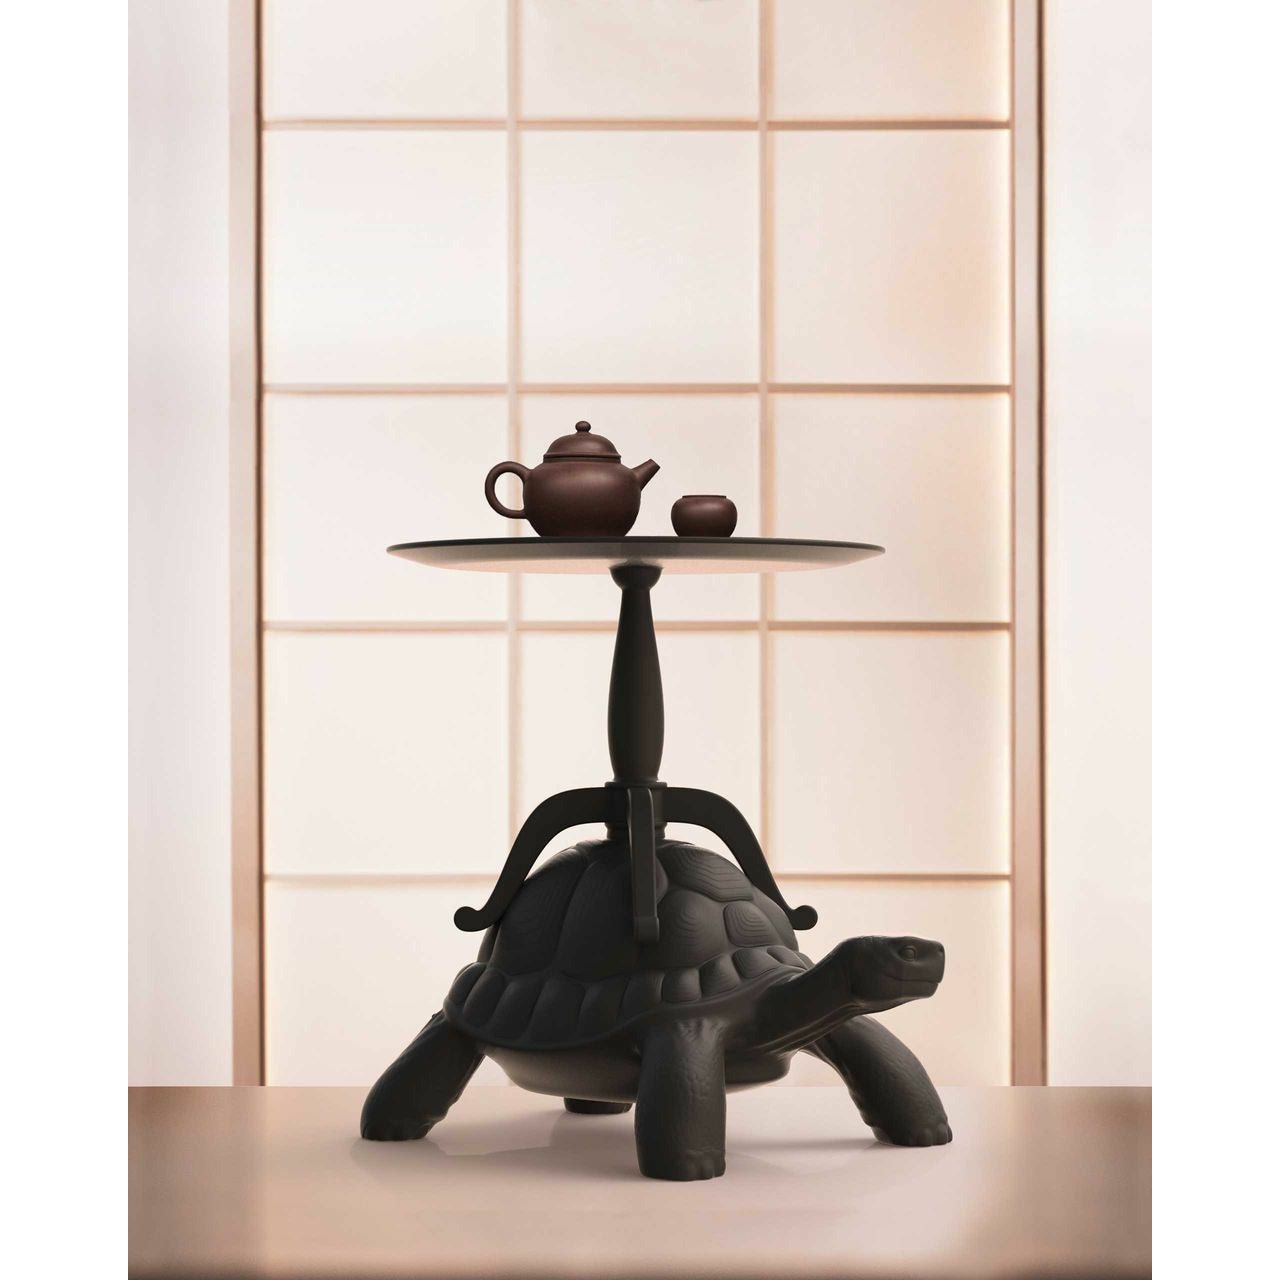 Qeeboo Turtle Carry Coffee Table, Black